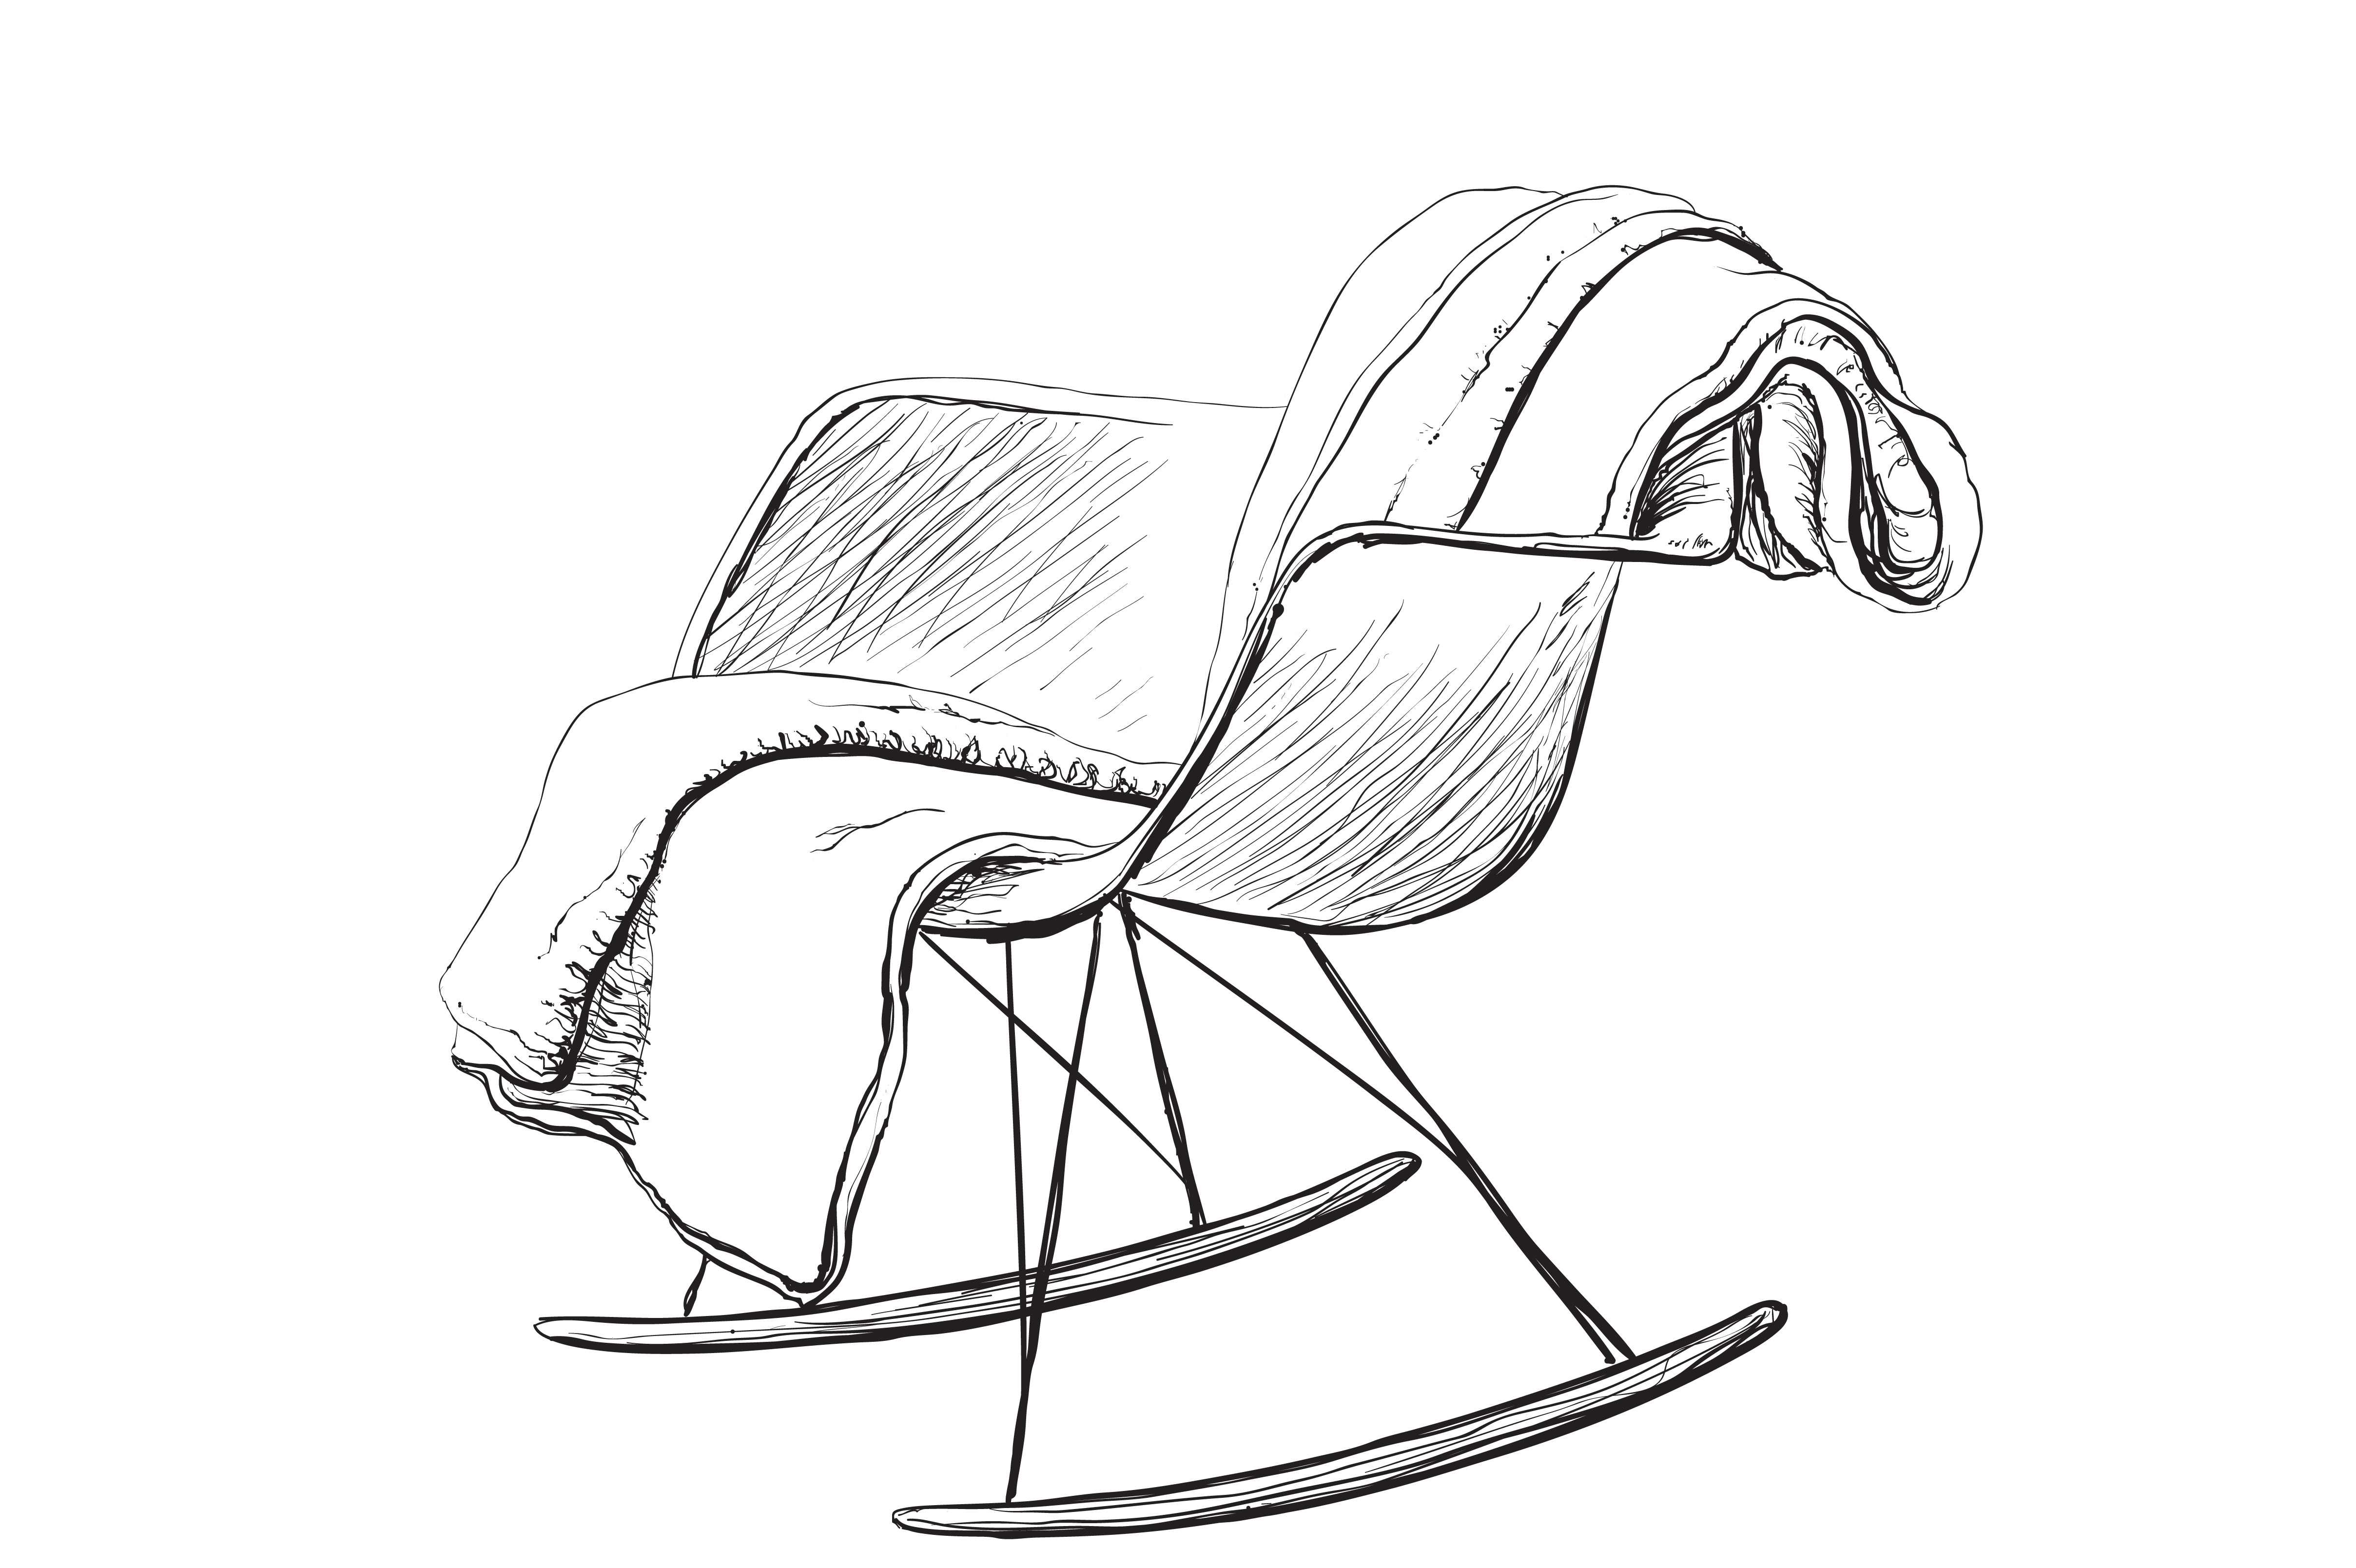 Rocking Chair Interior Sketch Custom Designed Illustrations